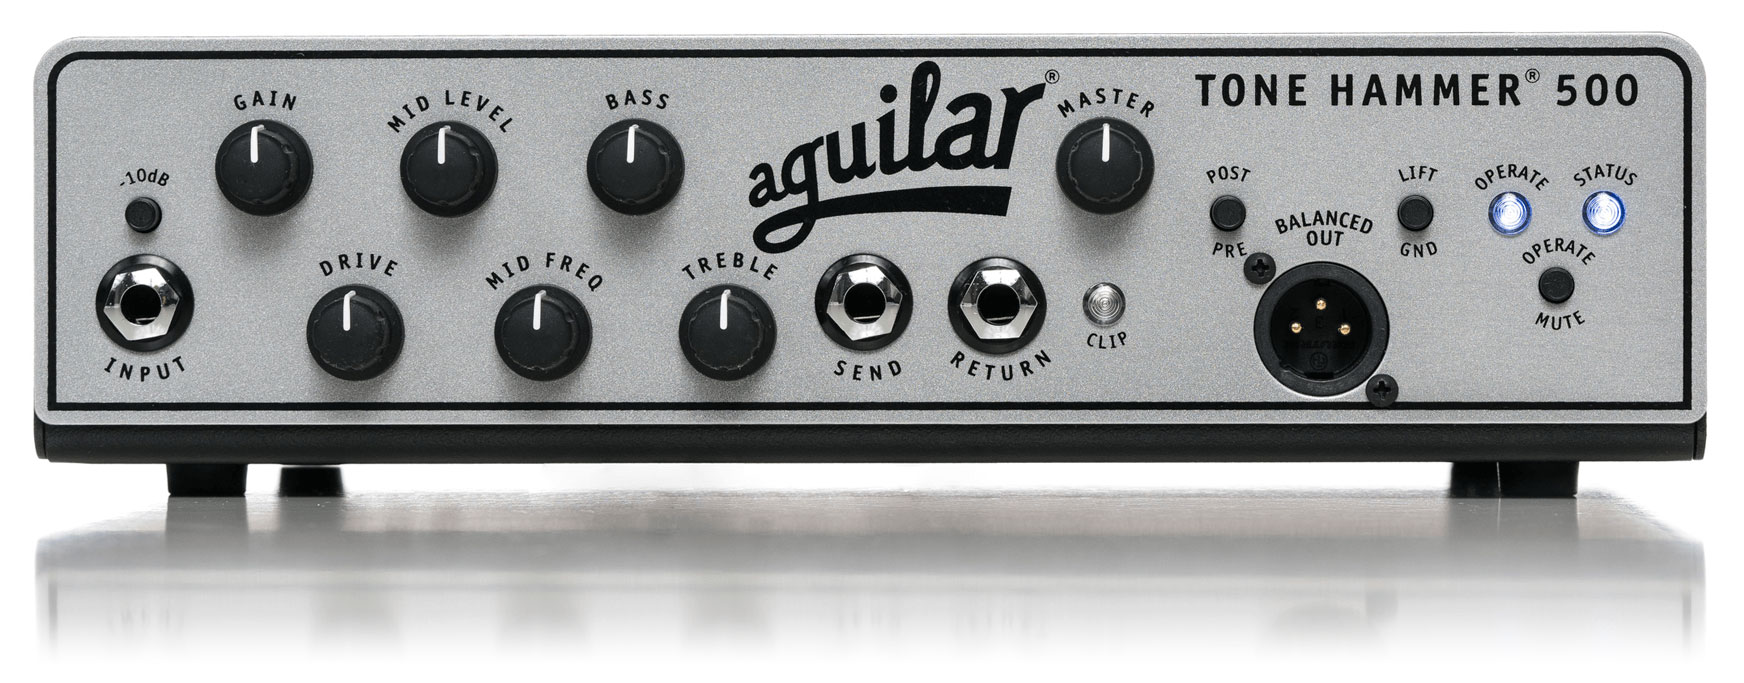 Tone Hammer 500 – Aguilar Amplification